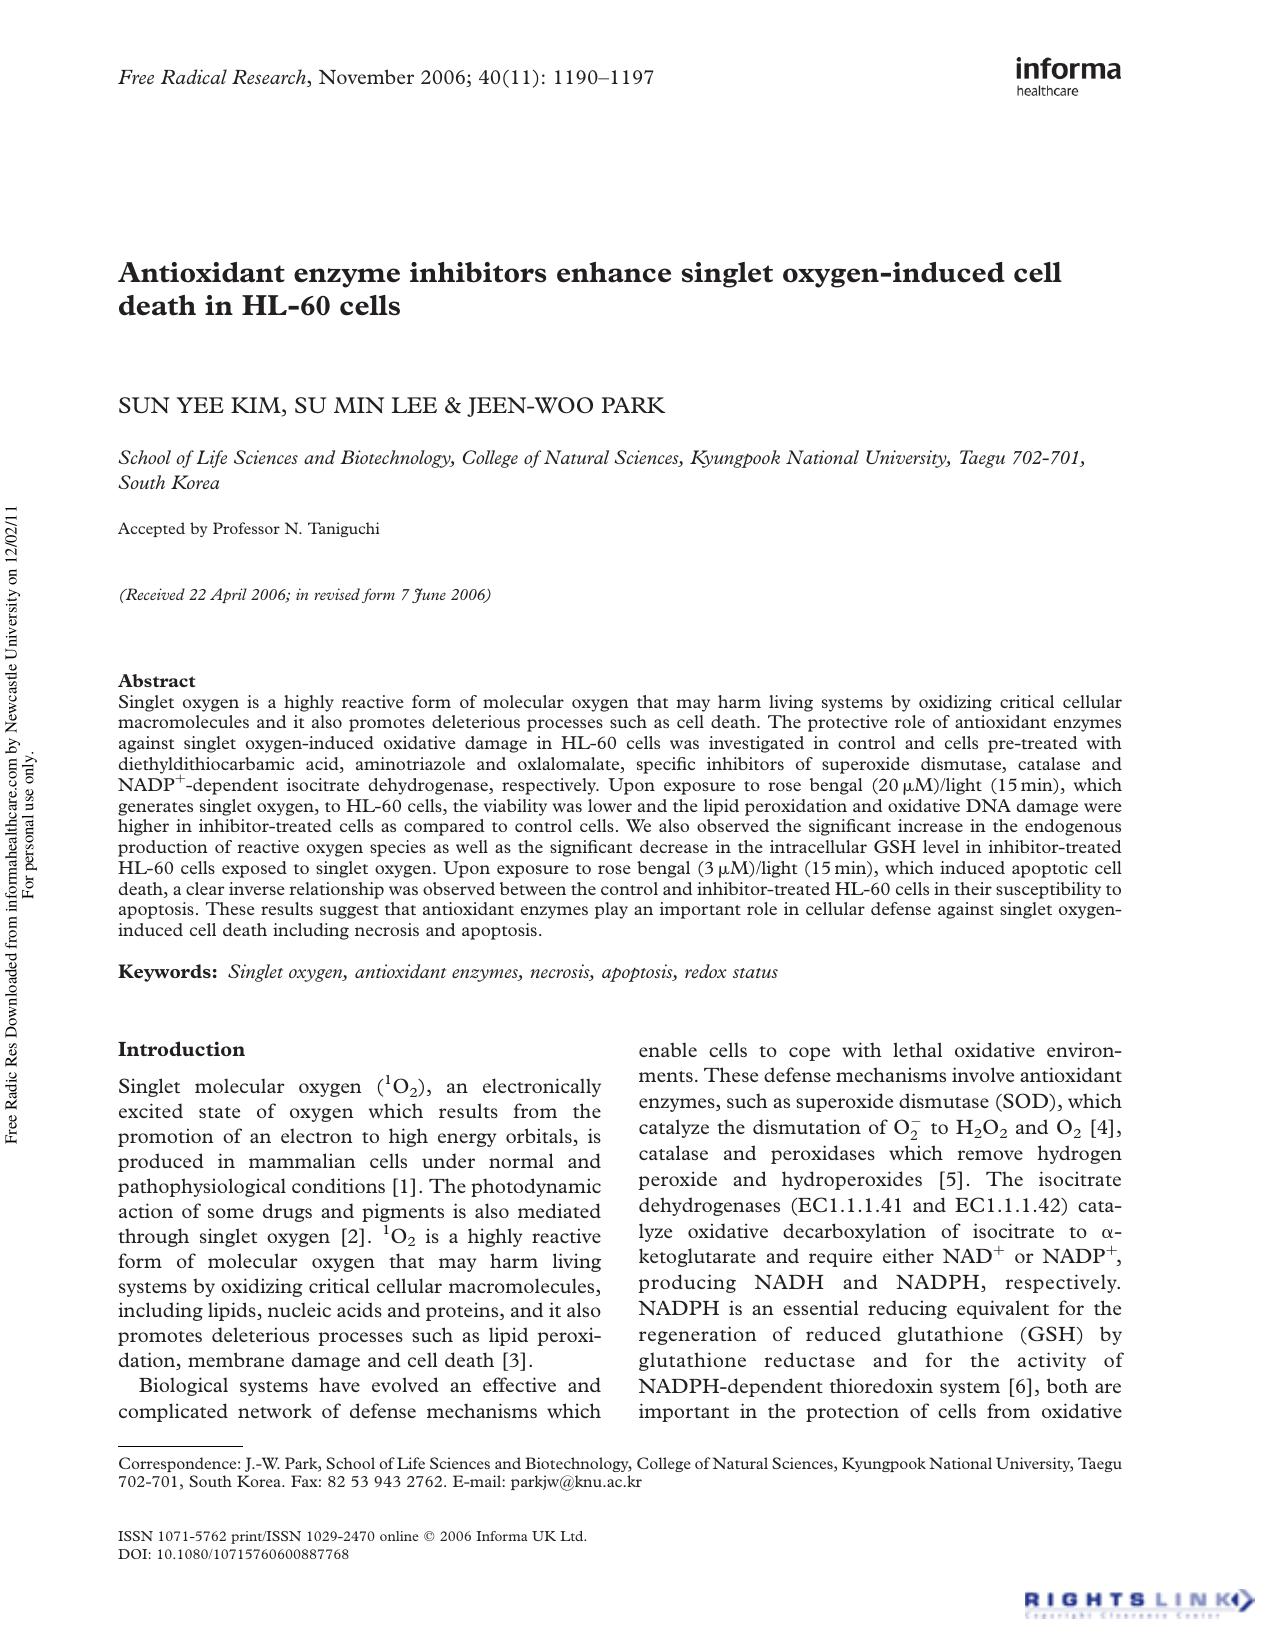 Antioxidant enzyme inhibitors enhance singlet oxygen-induced cell death in HL-60 cells by Sun Yee Kim1 Su Min Lee1 & Jeen-Woo Park1†